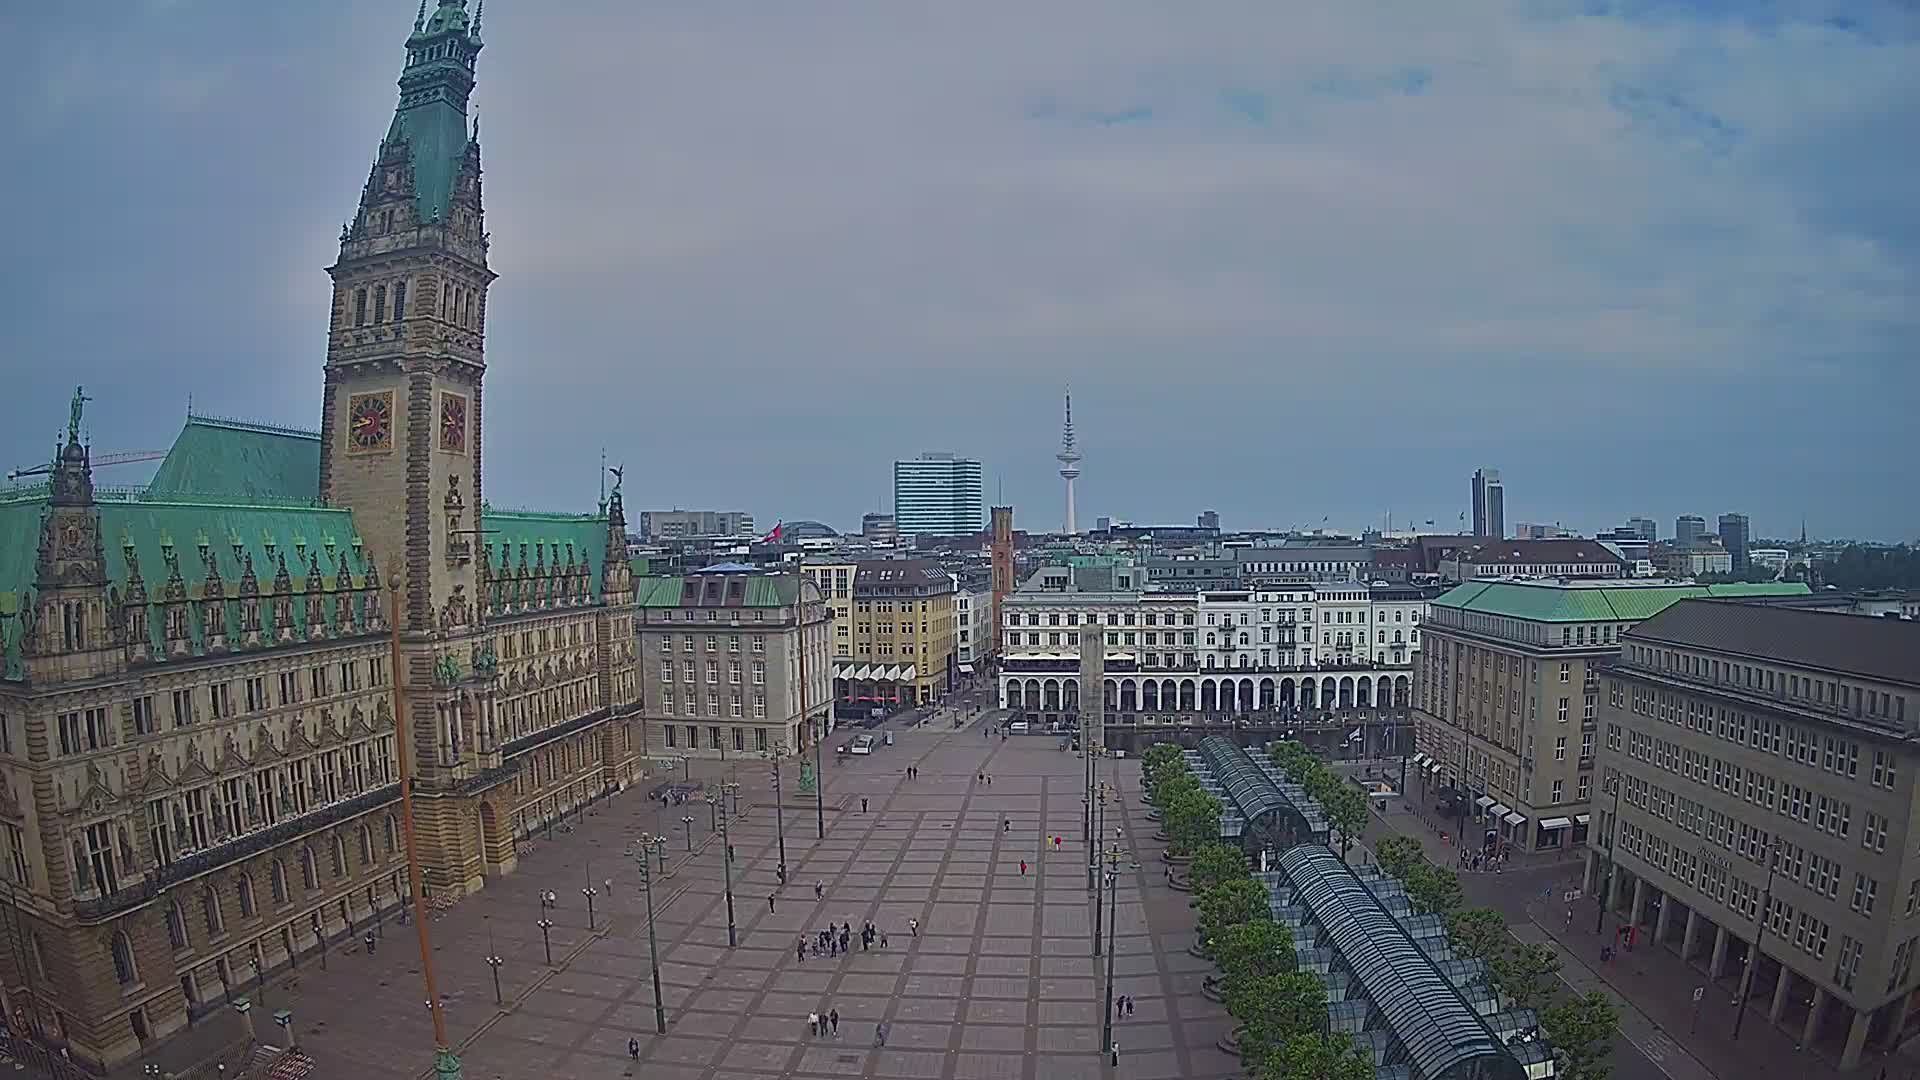 Hamborg Tor. 09:45